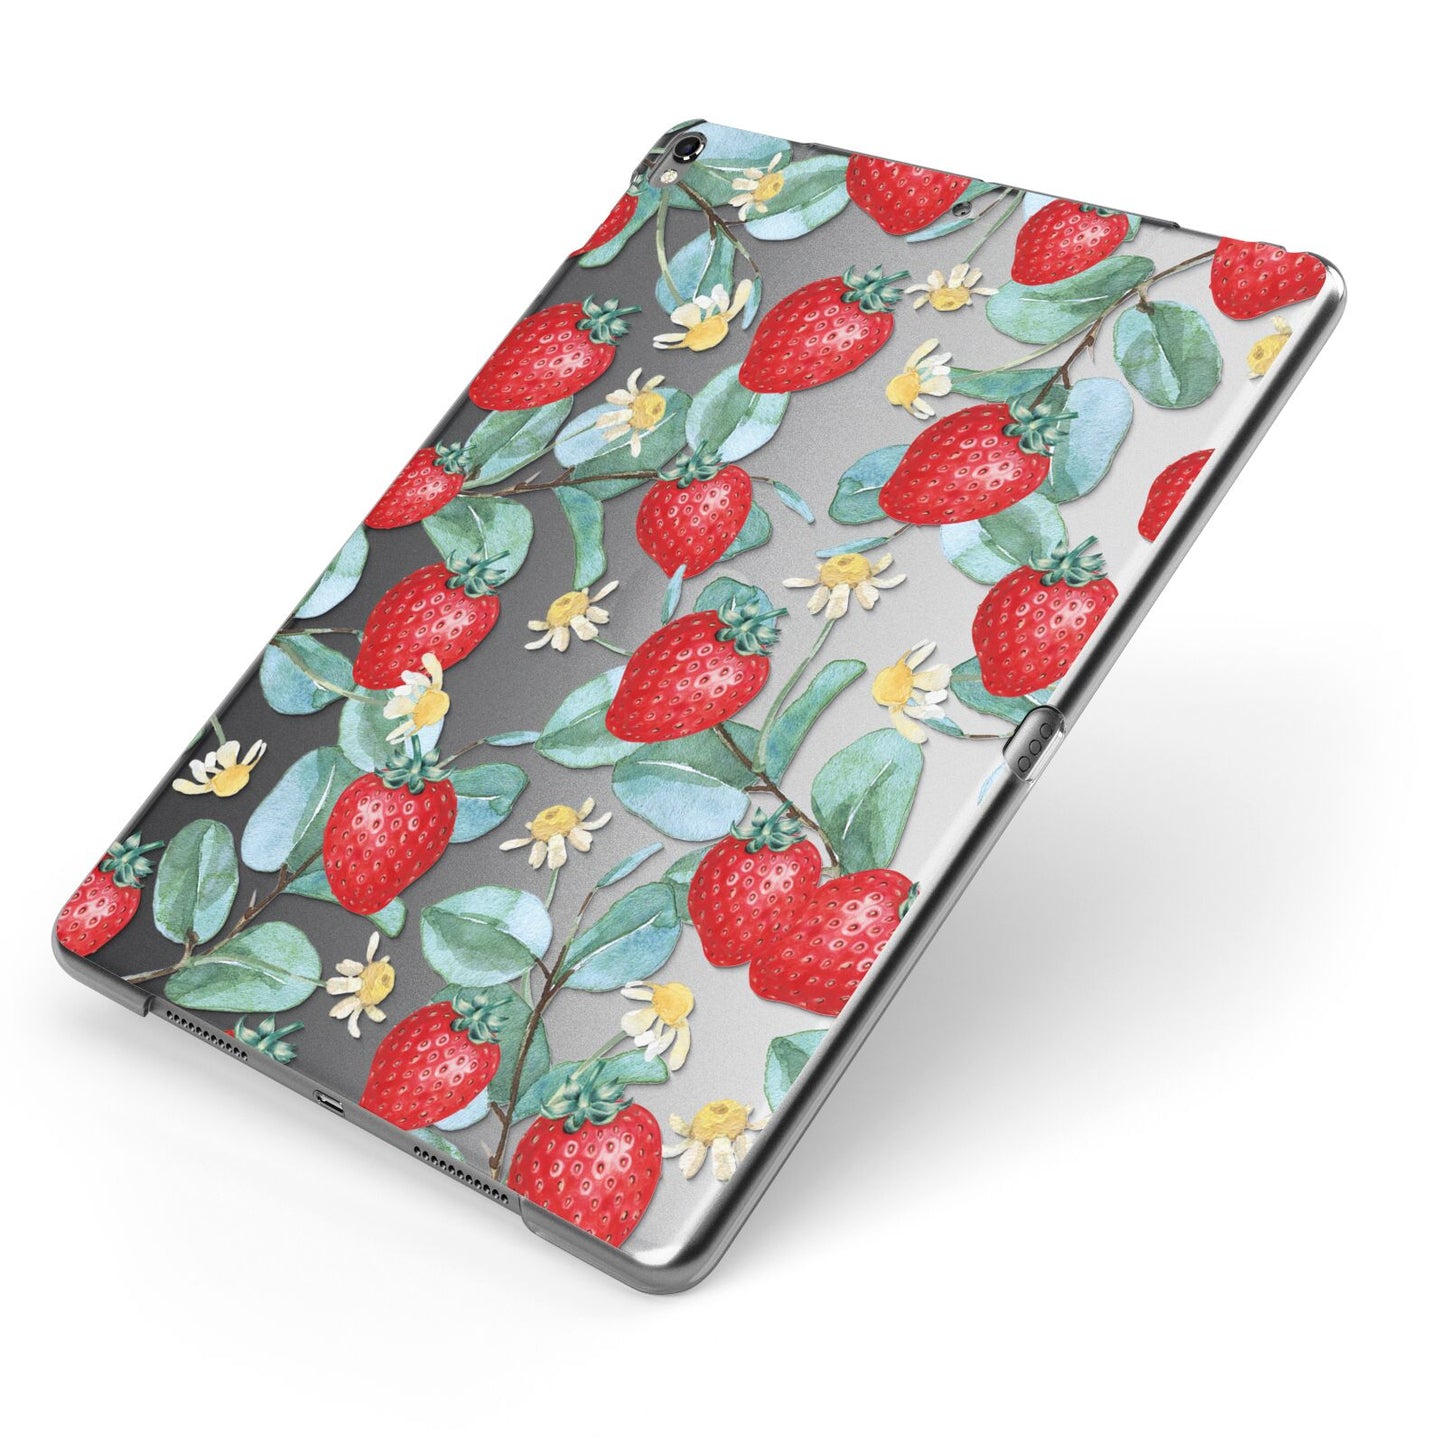 Strawberry Plant Apple iPad Case on Grey iPad Side View